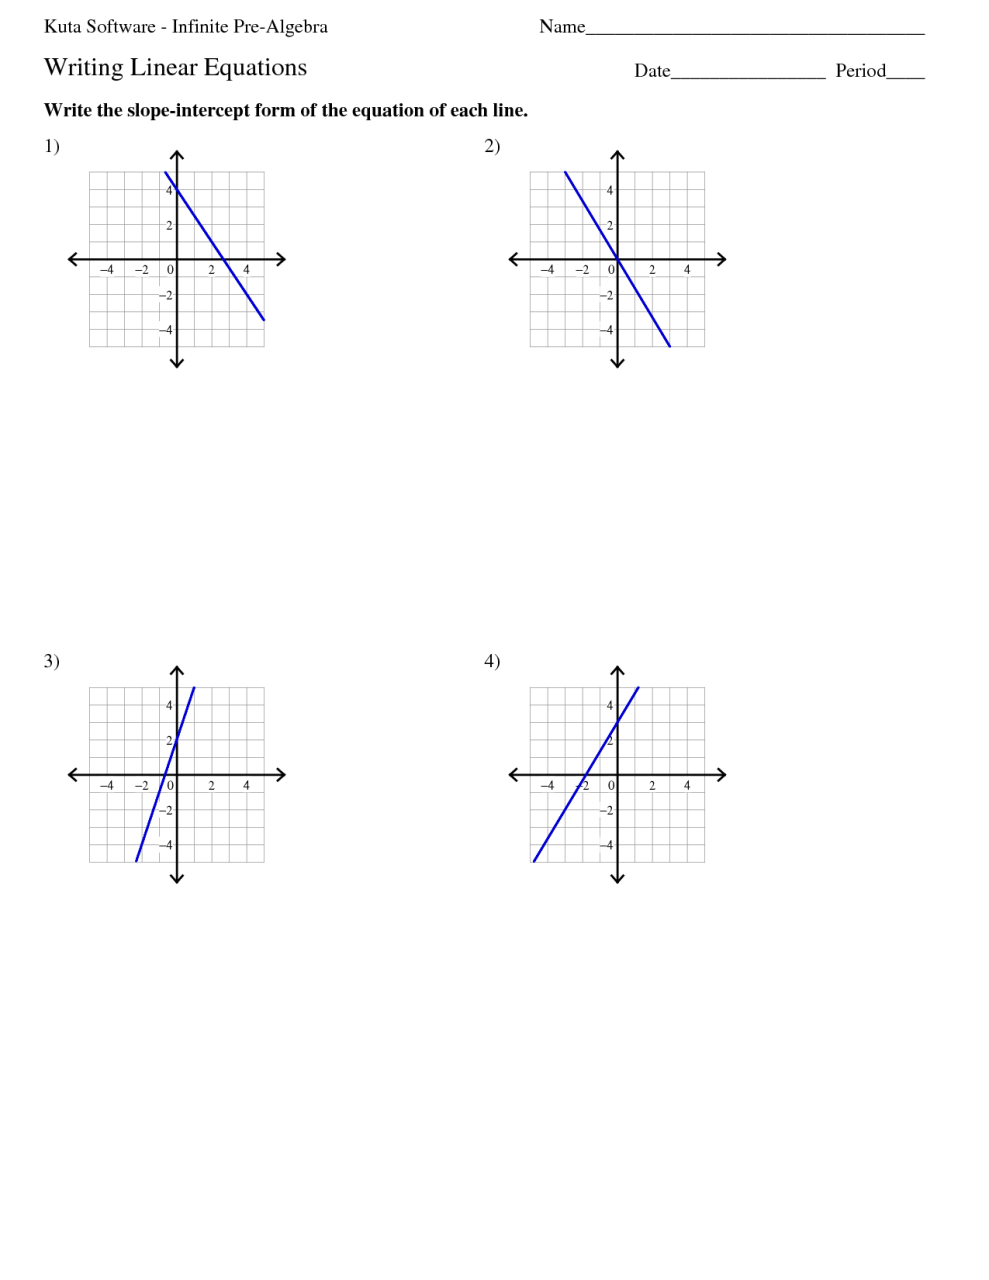 Algebra 1 Point Slope Form Worksheet Key writing equations in slope